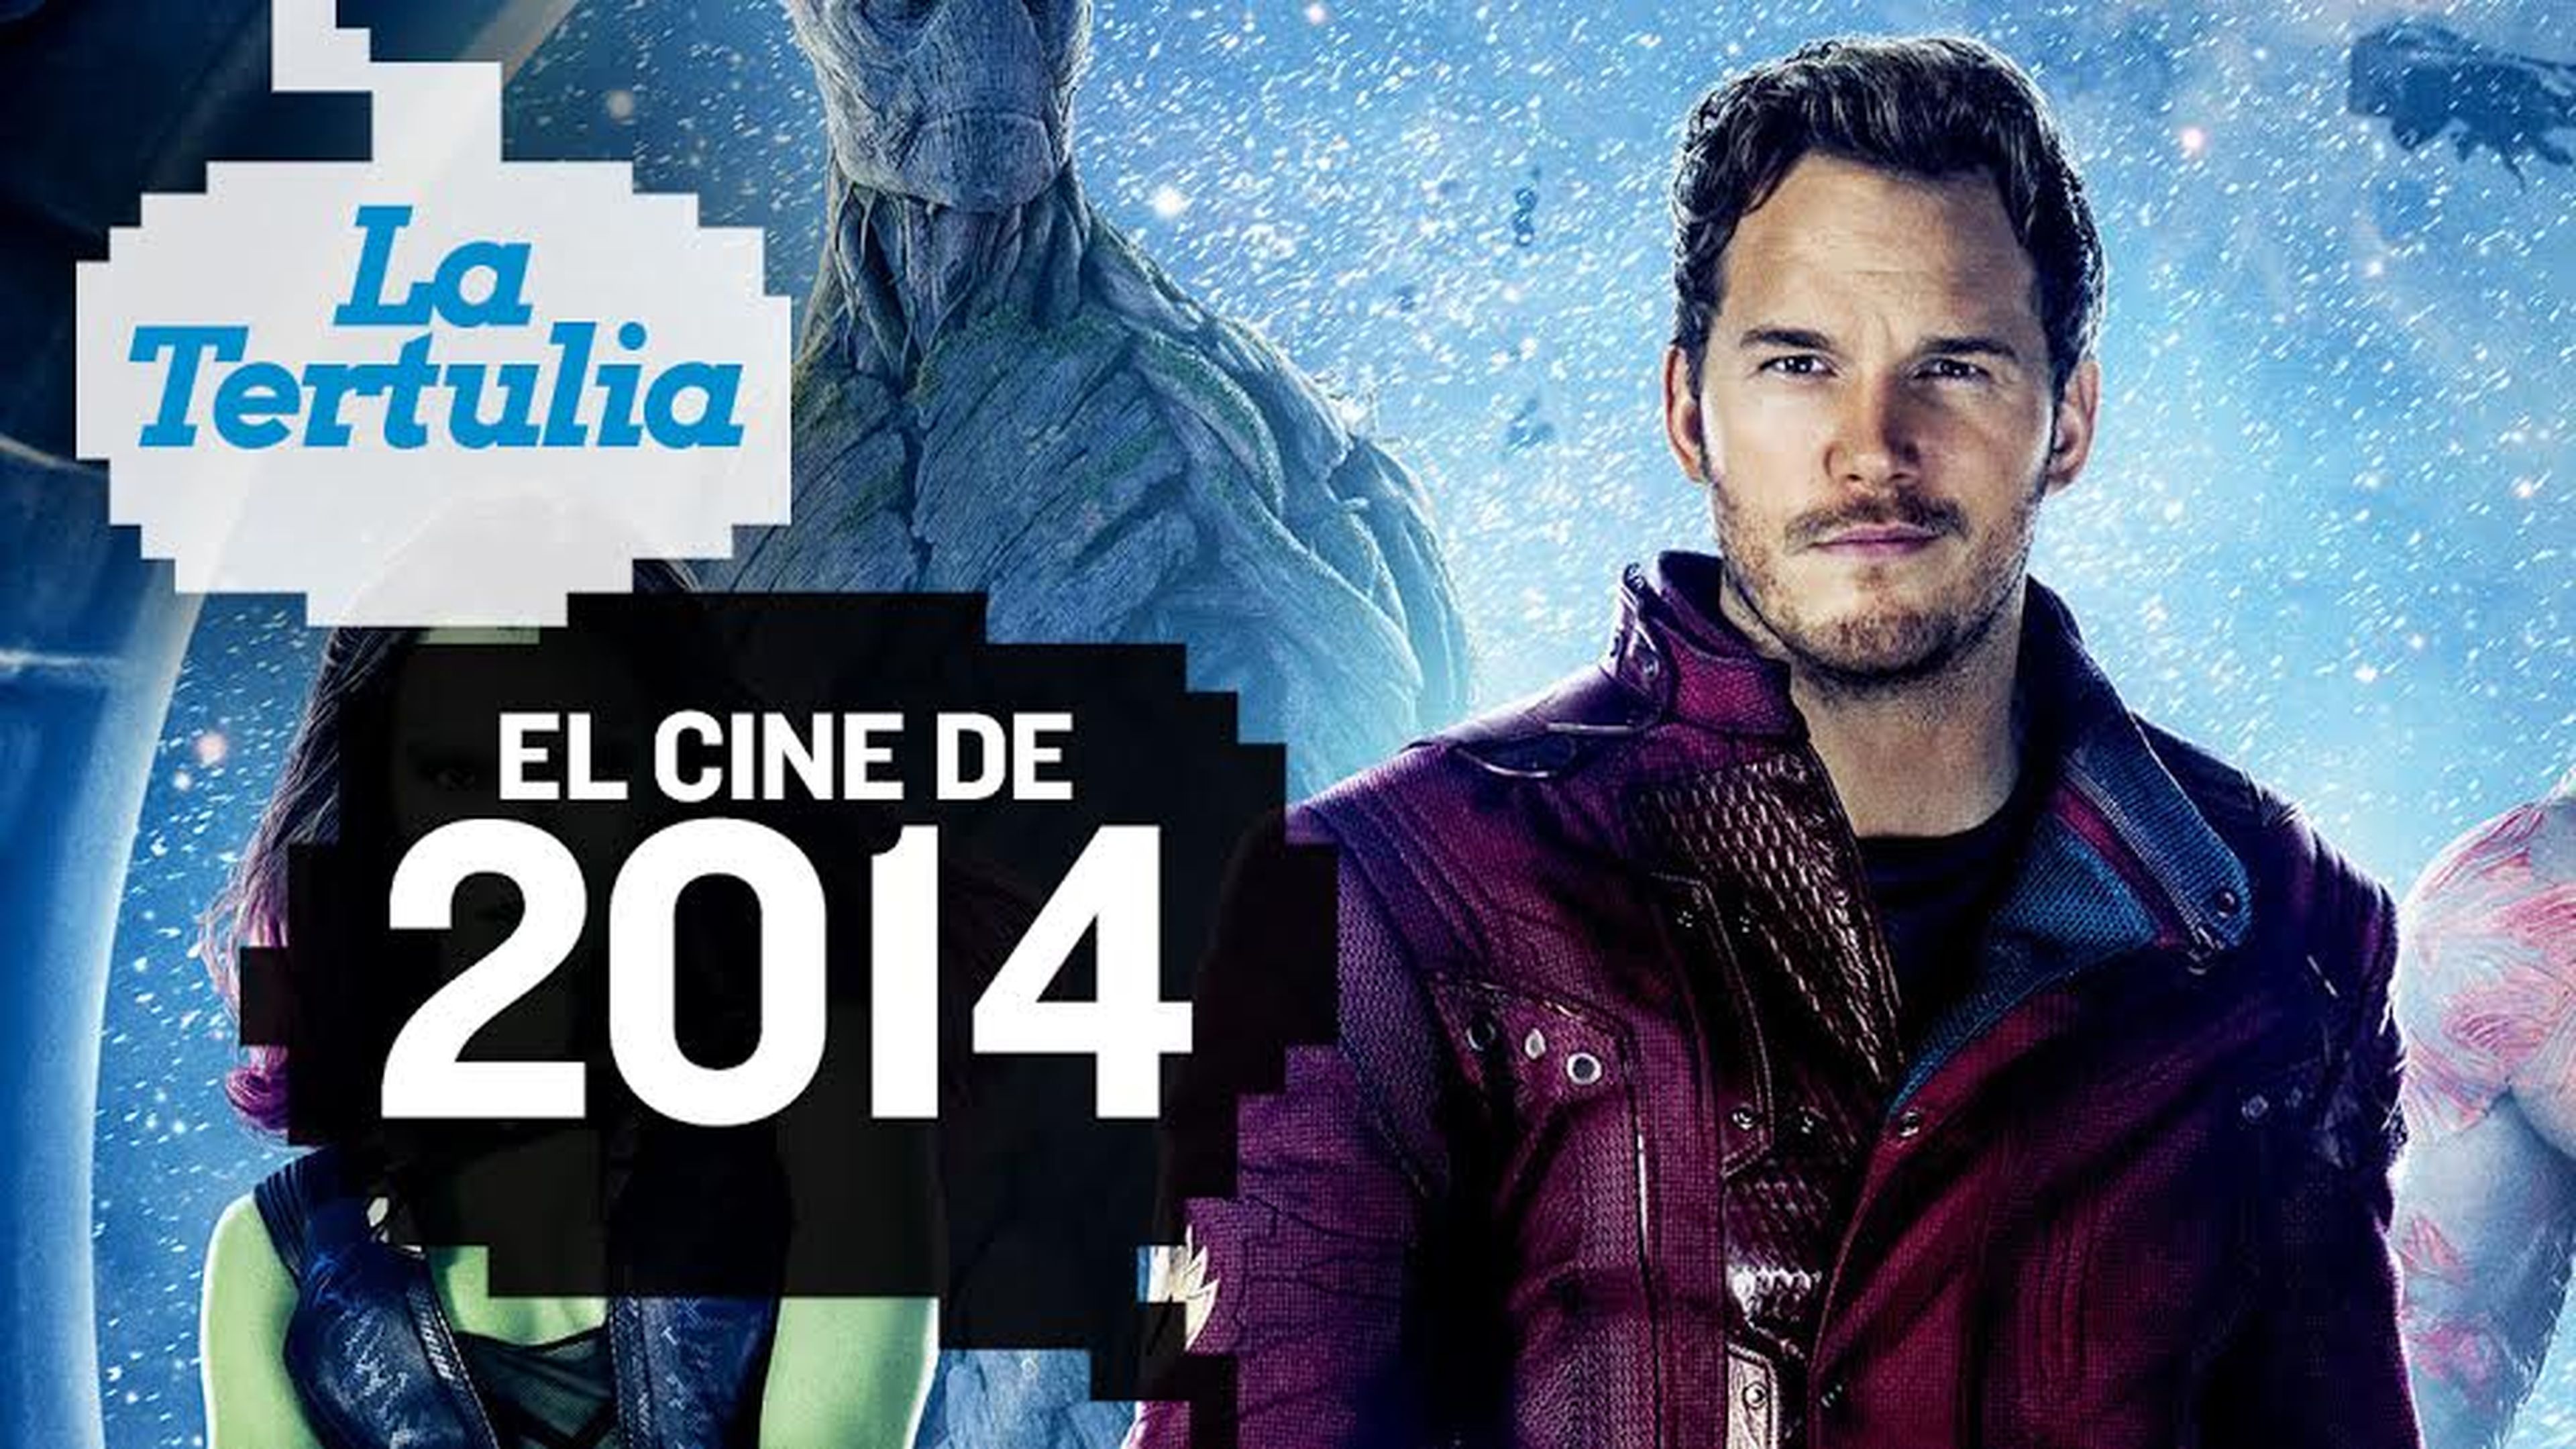 Tertulia: El cine de 2014